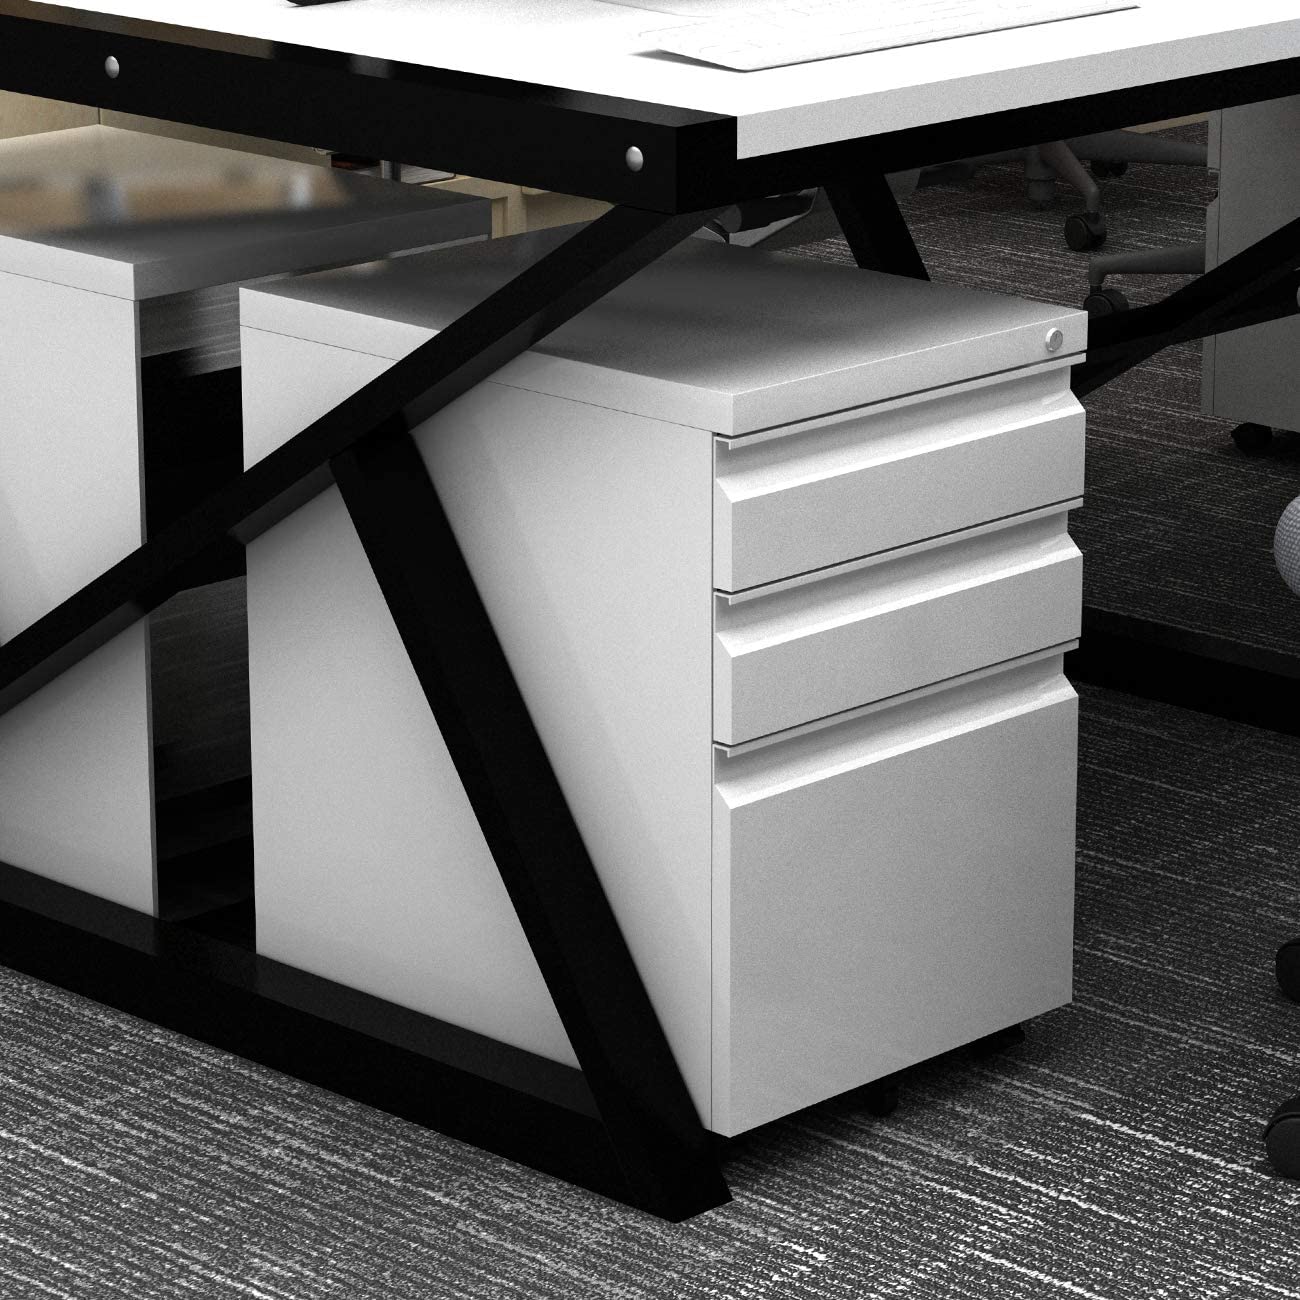 DBin office furniture 3 Drawer file cabinet